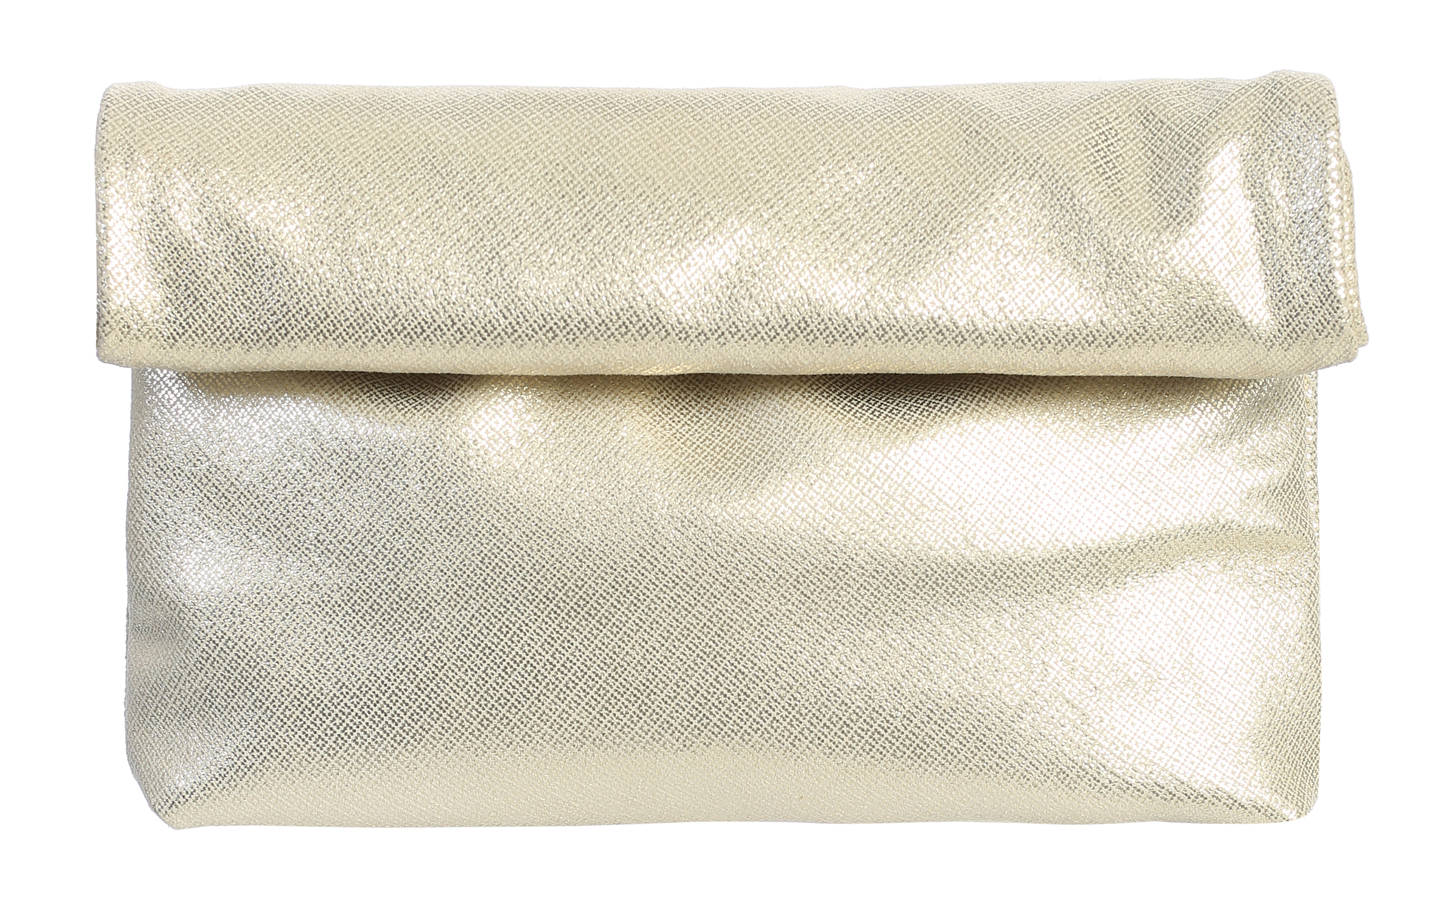 Purse Style Silver Paper Bag